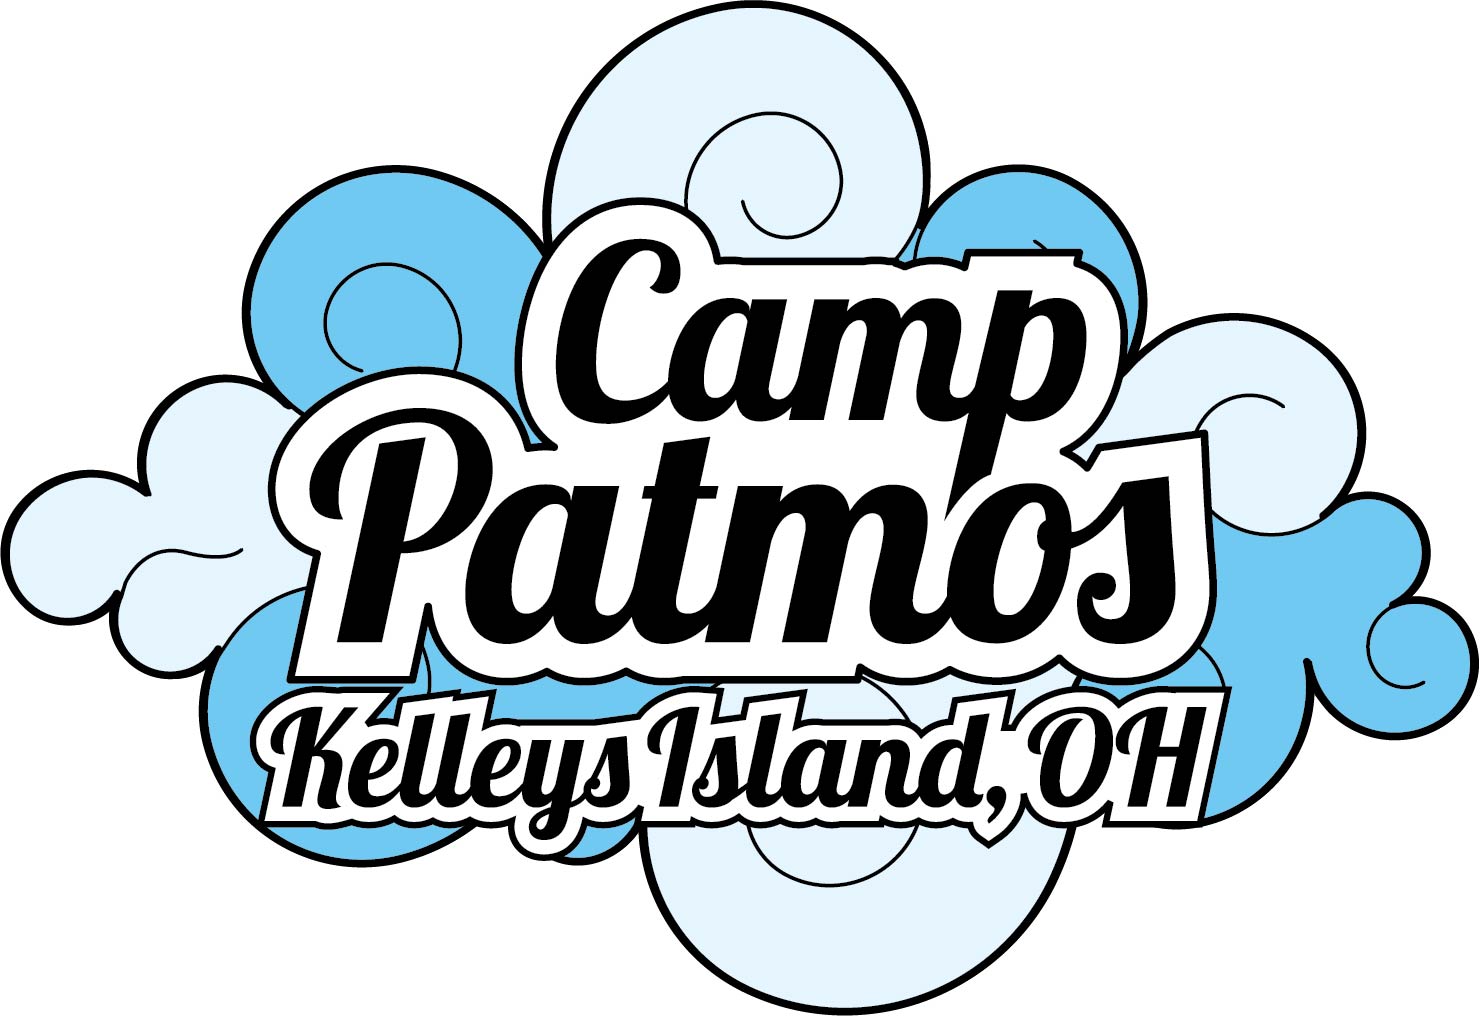 Camp Patmos logo